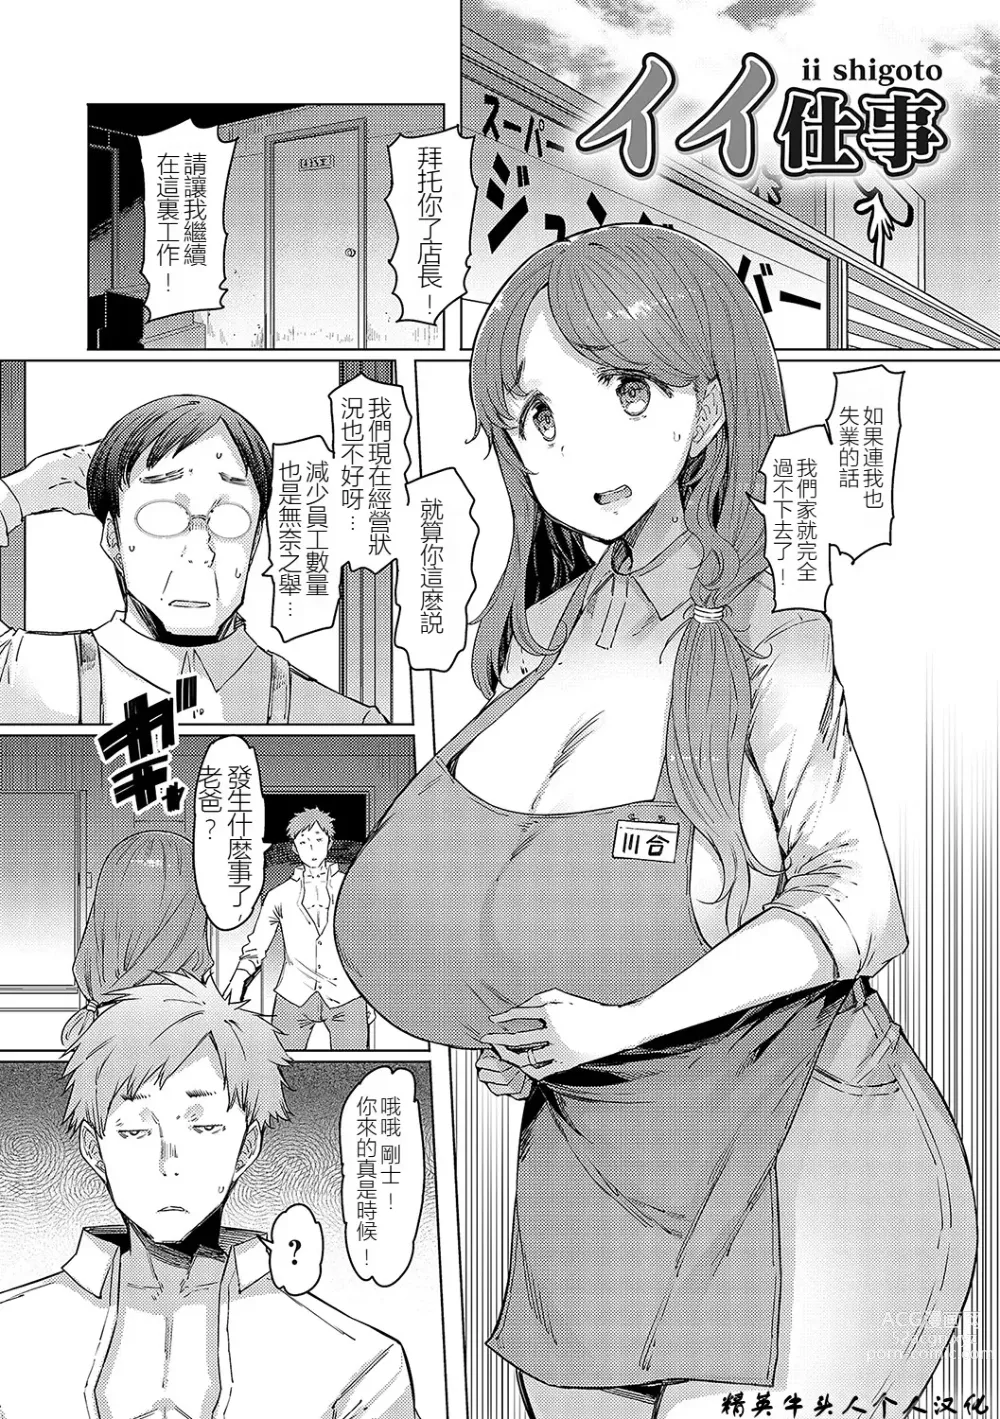 Page 1 of manga ii shigoto